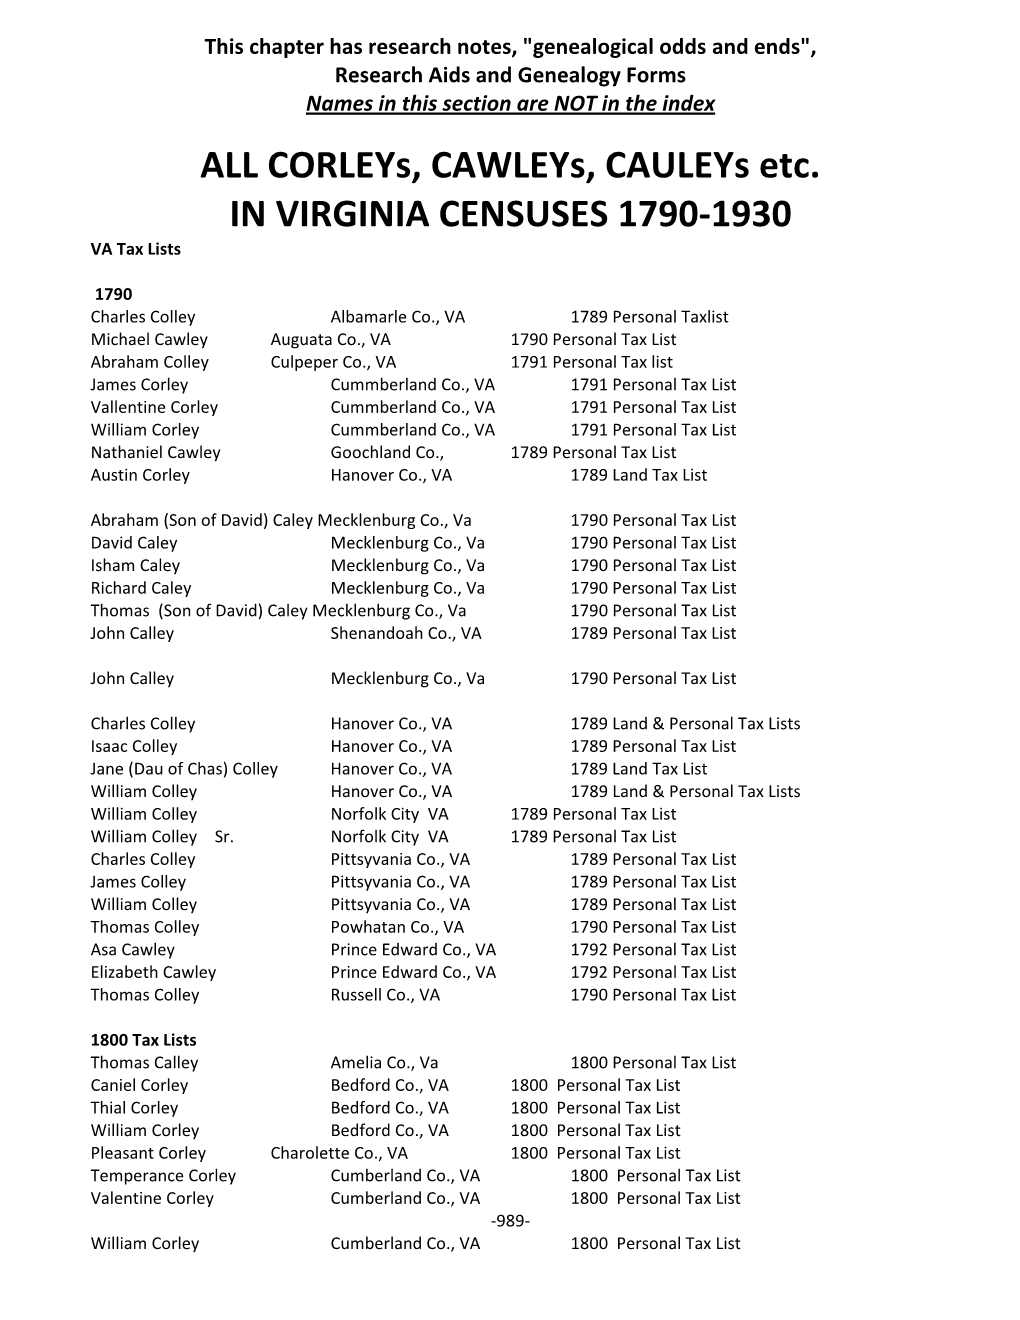 Corleys, Cawleys, Cauleys Etc. in VIRGINIA CENSUSES 1790-1930 VA Tax Lists